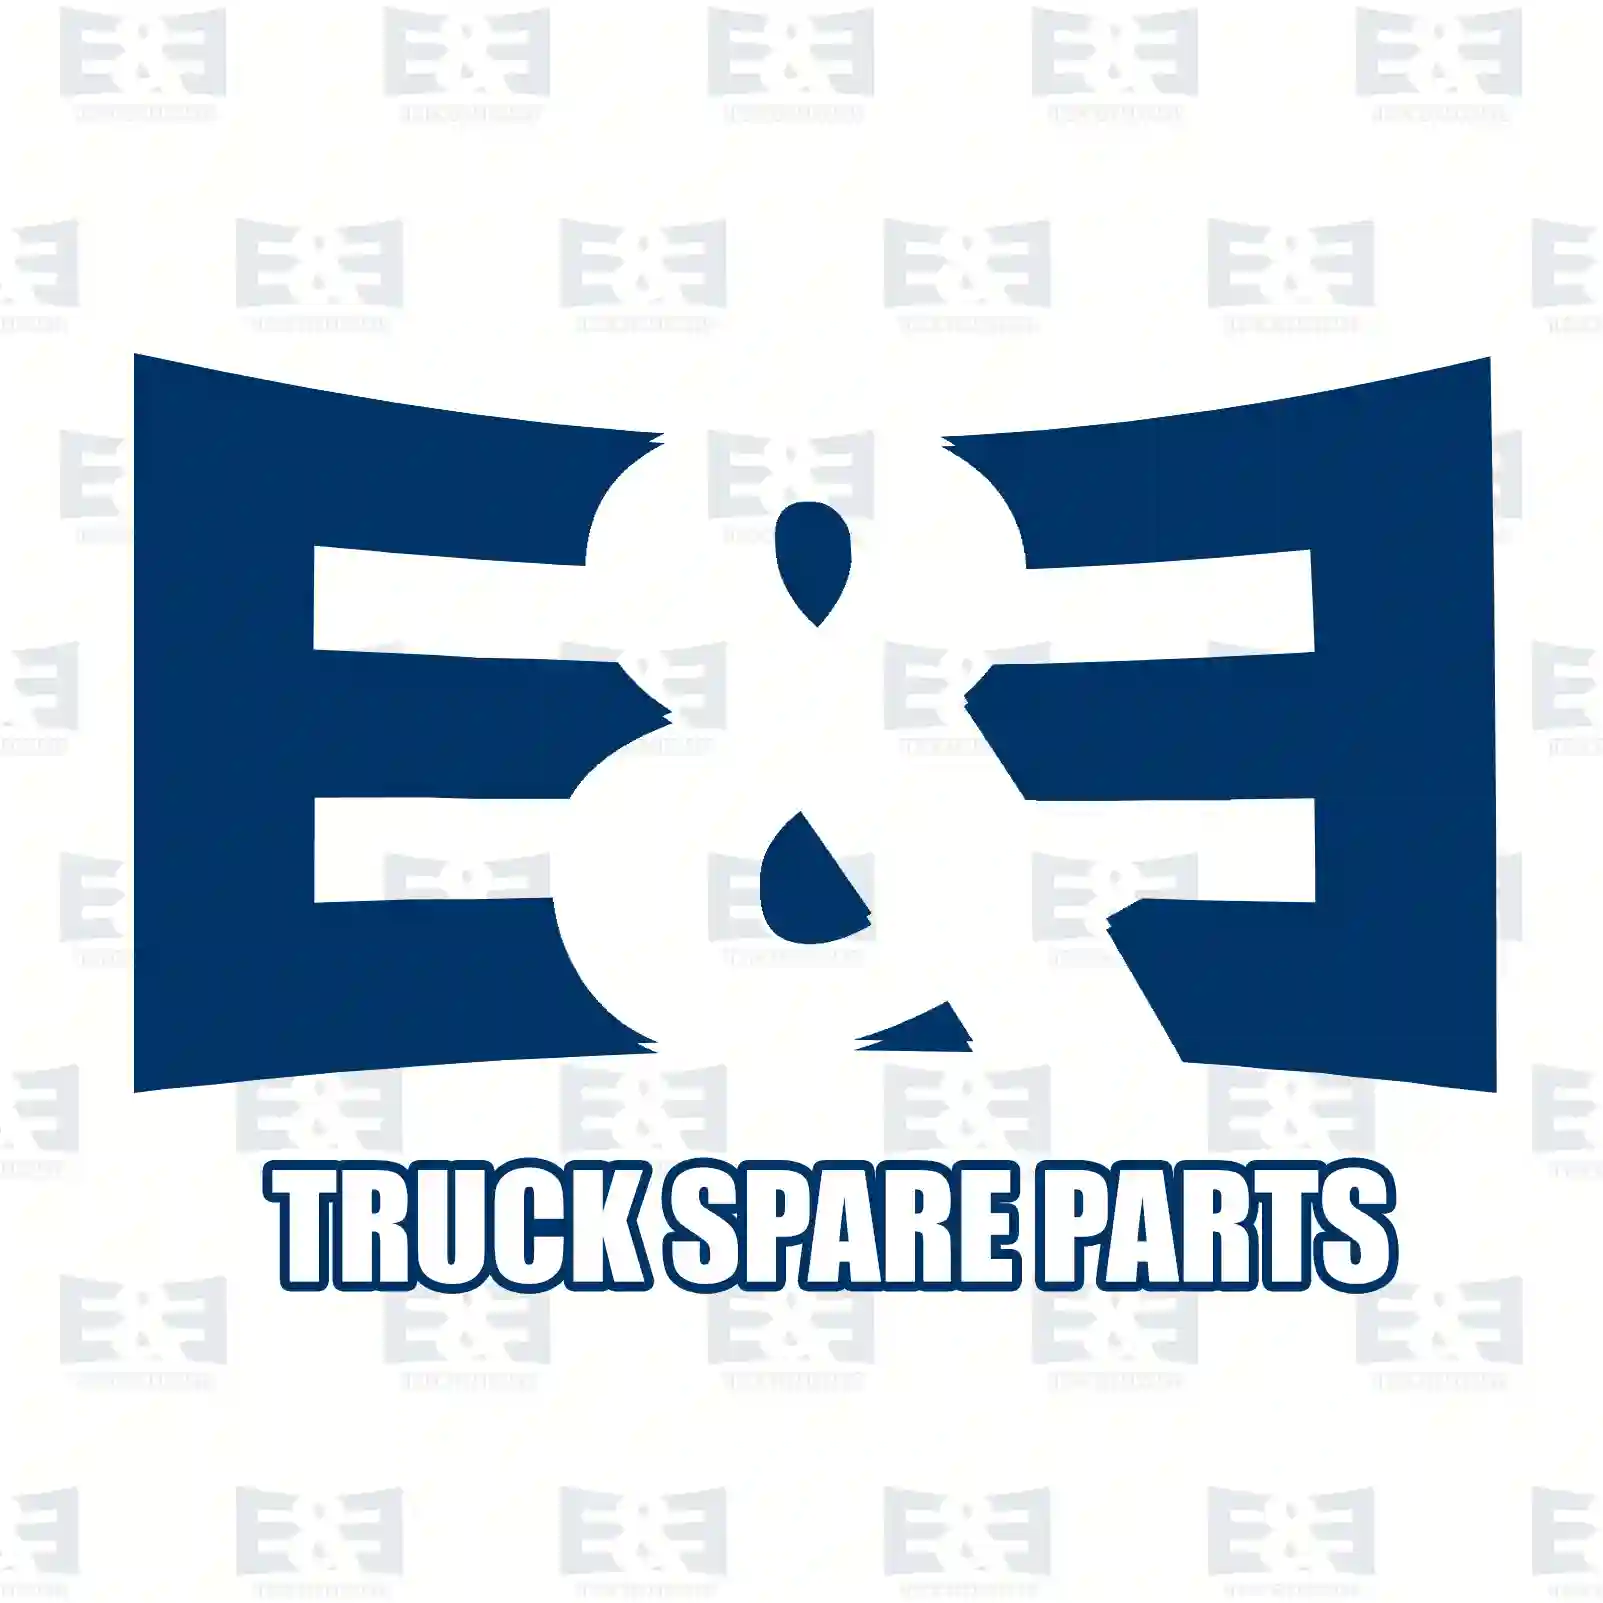 Air bellow, cabin shock absorber, 2E2276310, 5010491301, ZG40698-0008 ||  2E2276310 E&E Truck Spare Parts | Truck Spare Parts, Auotomotive Spare Parts Air bellow, cabin shock absorber, 2E2276310, 5010491301, ZG40698-0008 ||  2E2276310 E&E Truck Spare Parts | Truck Spare Parts, Auotomotive Spare Parts